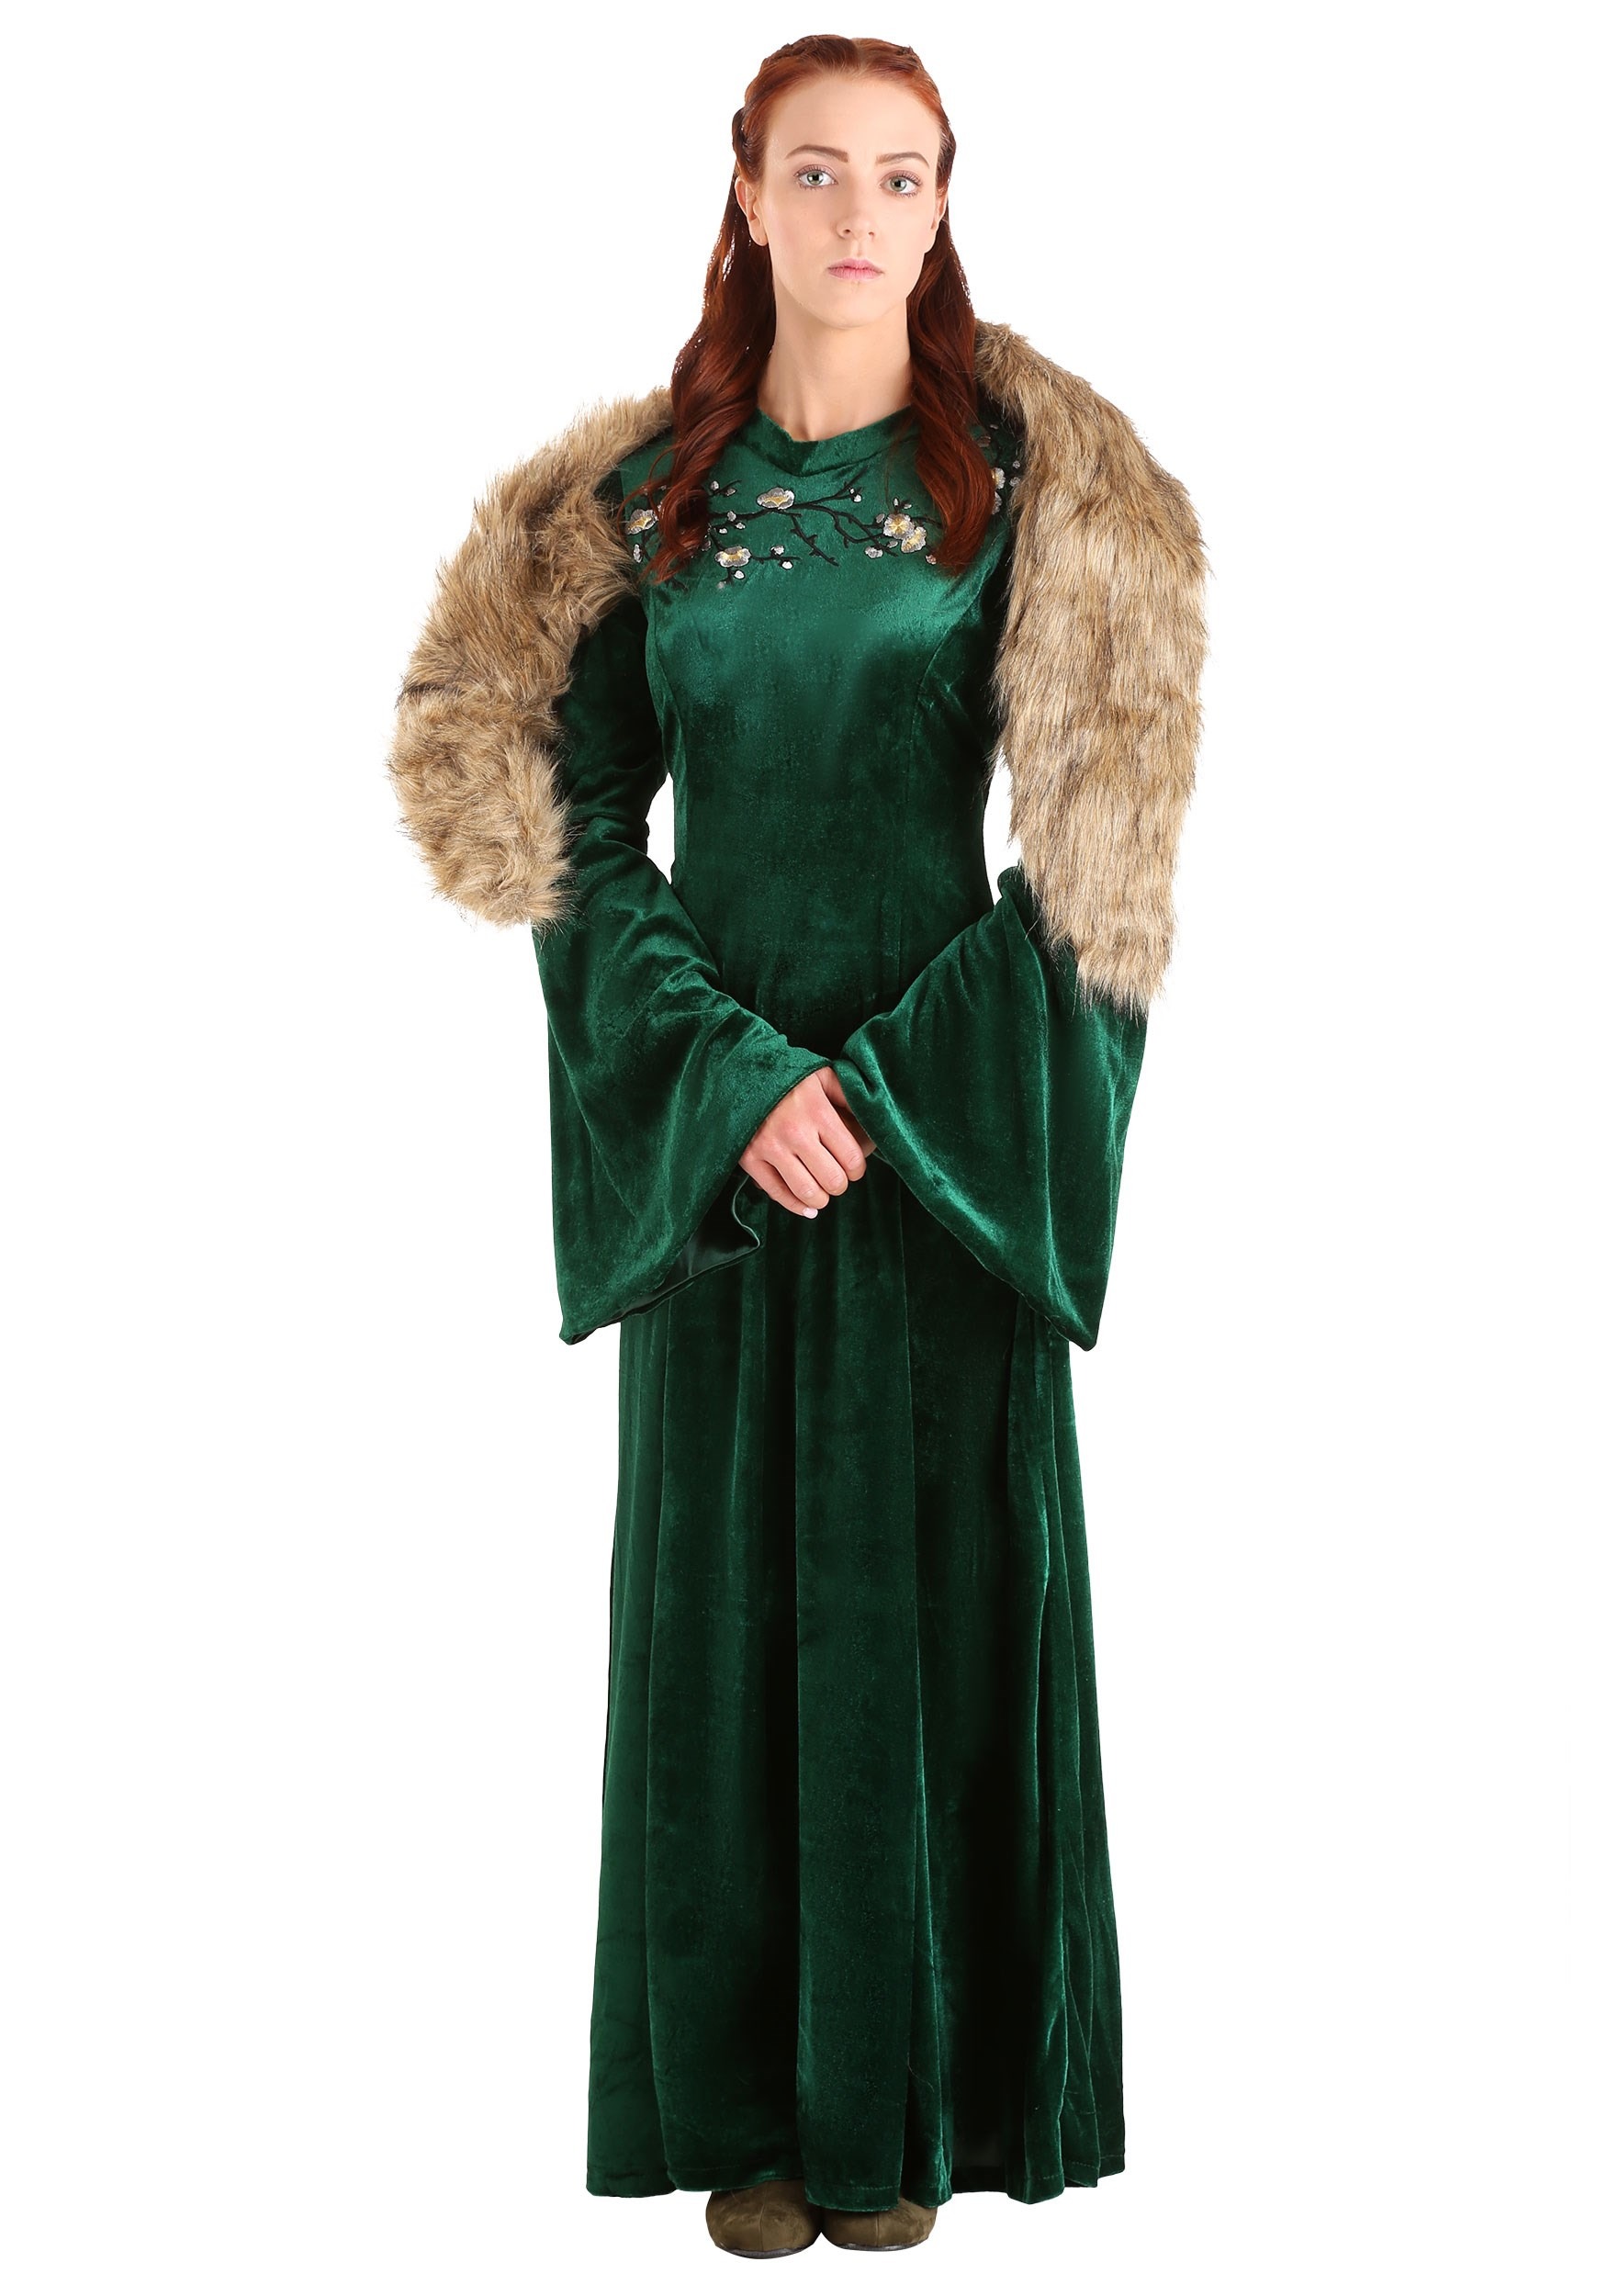 Wolf Princess Women's Fancy Dress Costume